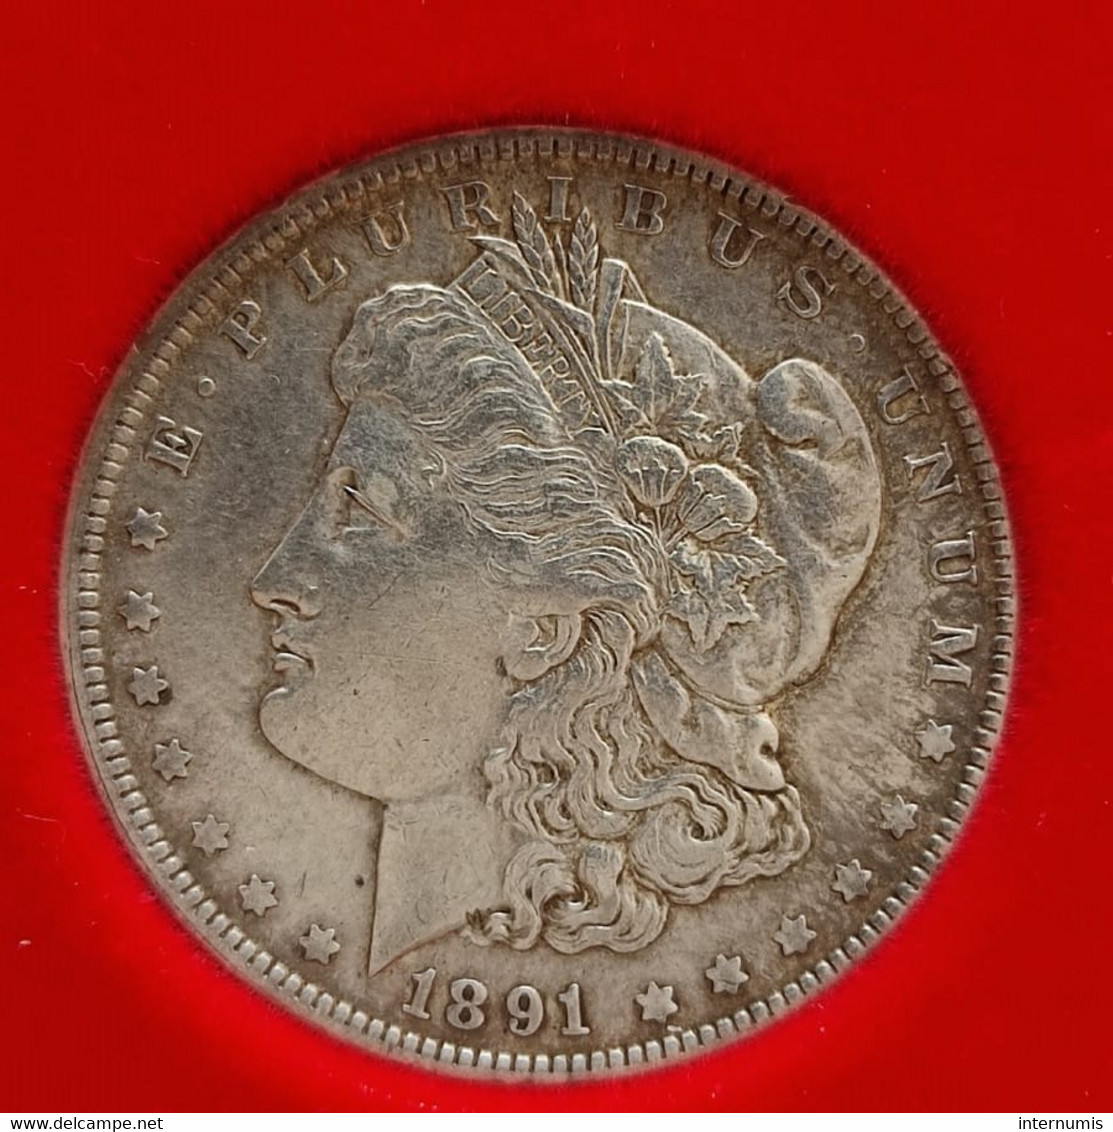 Etats-Unis / USA, Morgan, 1 Dollar, 1891, Argent (Silver), SUP (AU), KM#110 - 1878-1921: Morgan